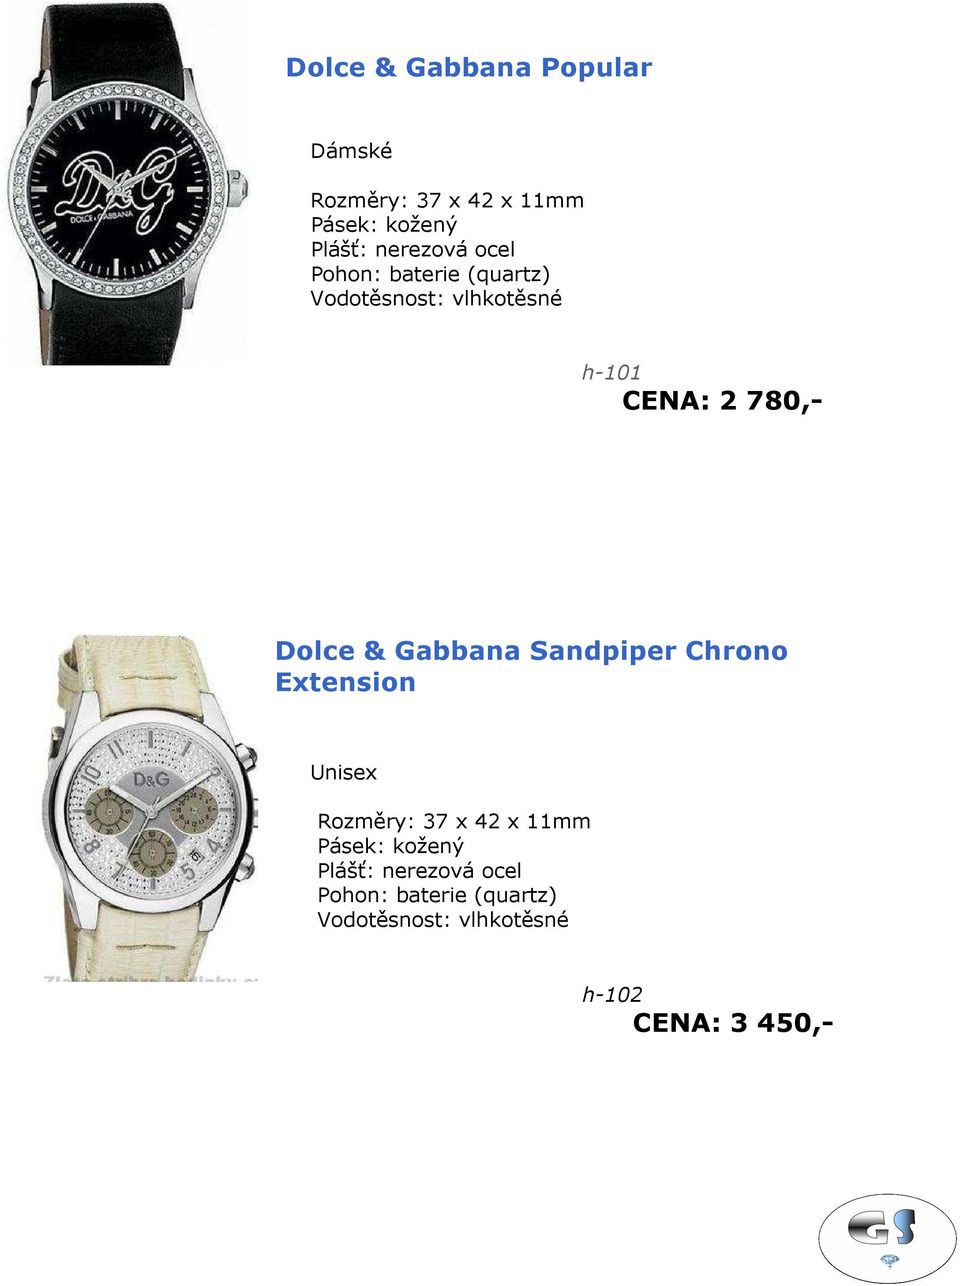 Dolce & Gabbana Sandpiper Chrono Extension Unisex Rozměry: 37 x 42 x 11mm Pásek: